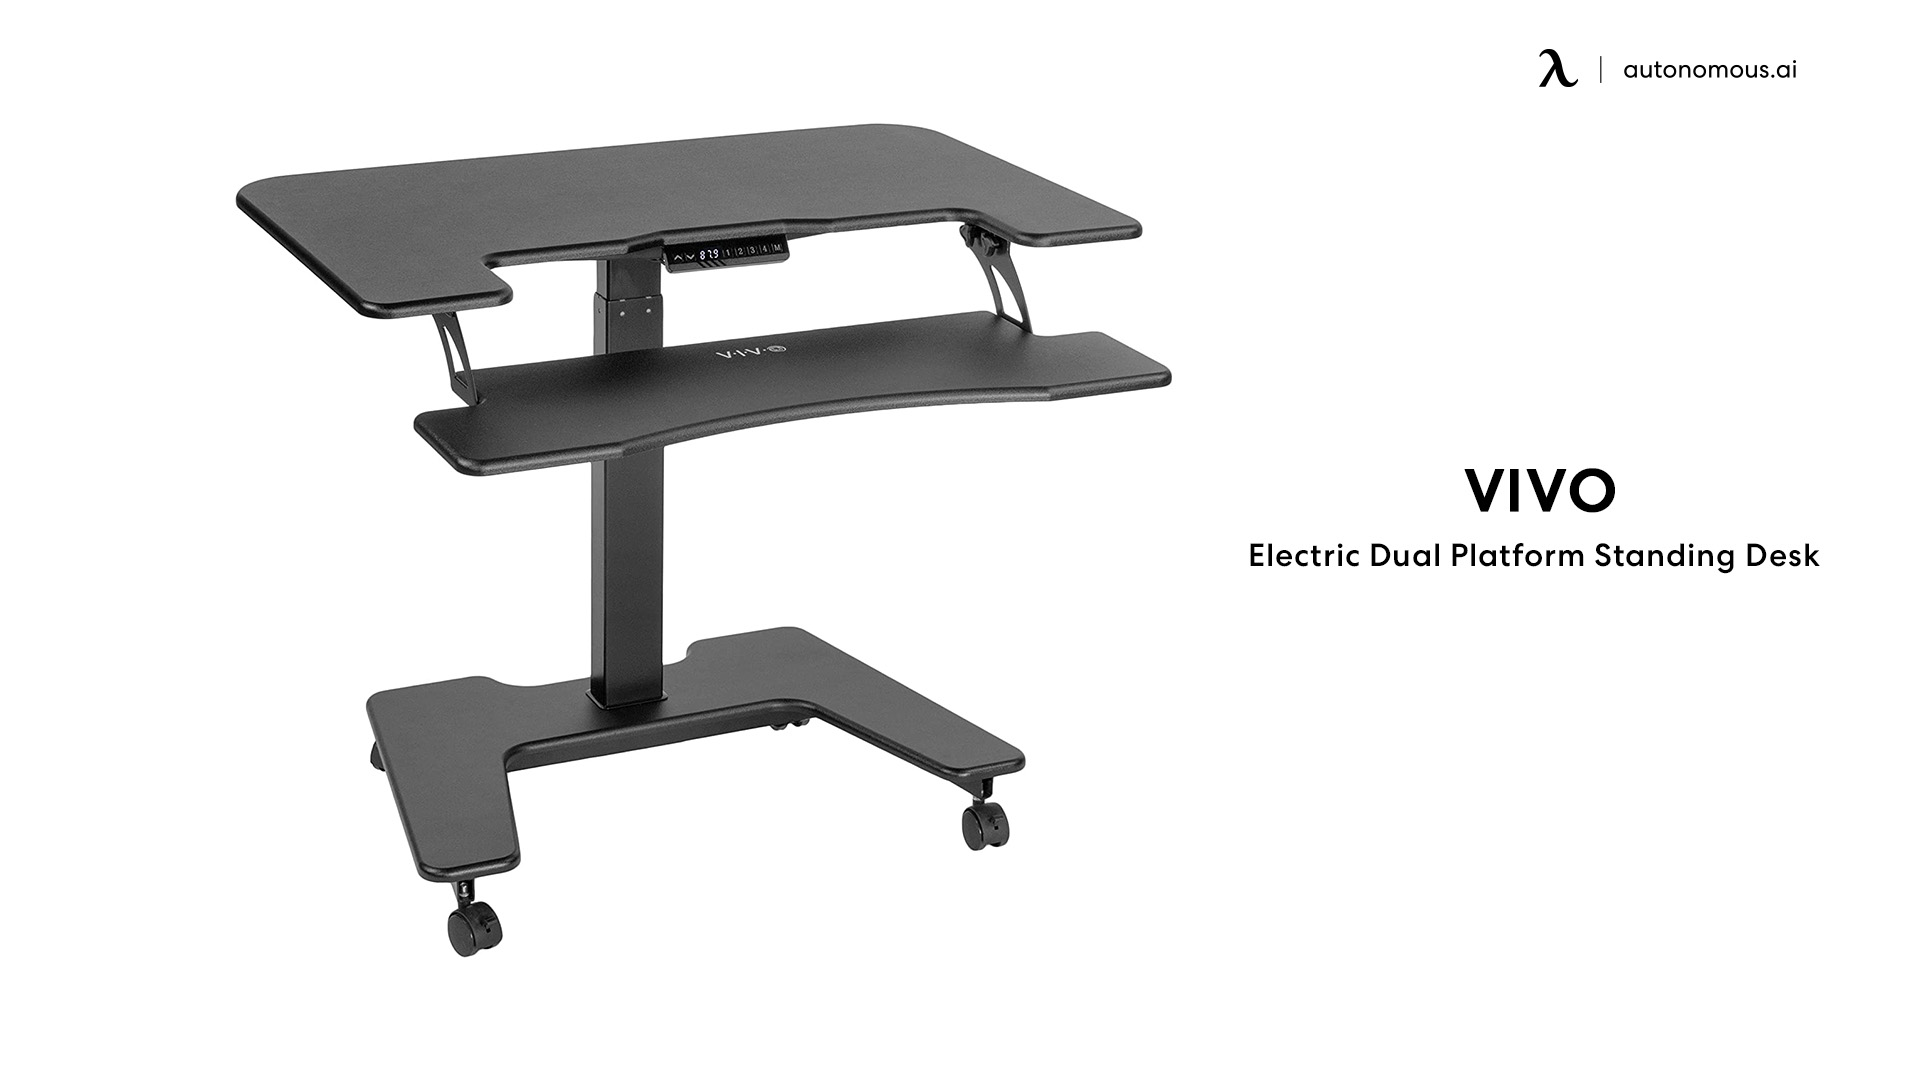 VIVO Electric Dual Platform Standing Desk